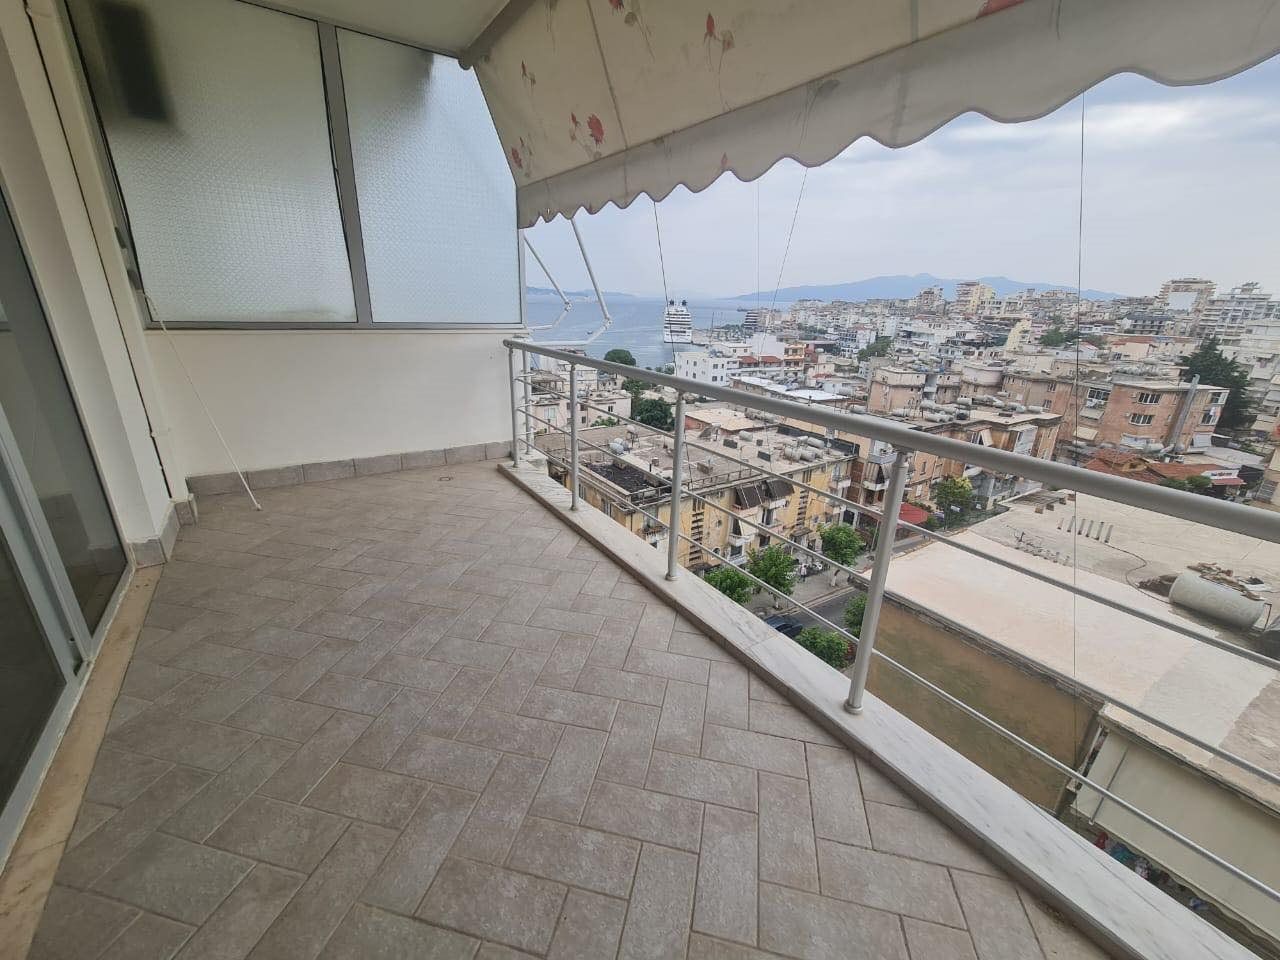 Sea View Apartment For Sale In Saranda Albania